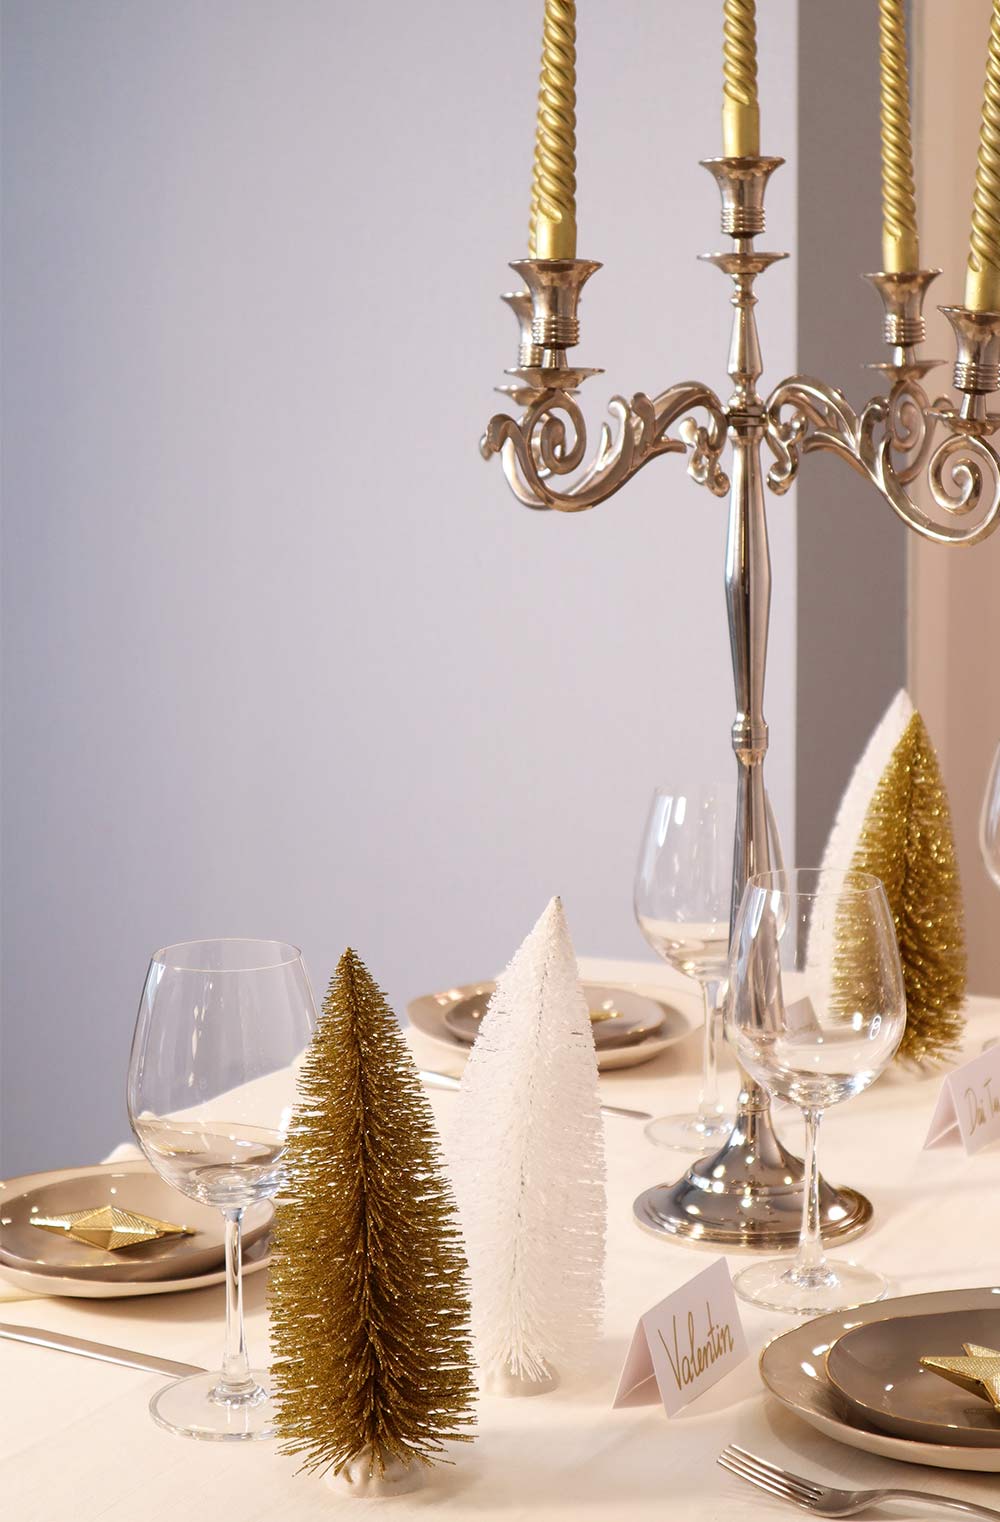 How to Set a Festive Christmas Table